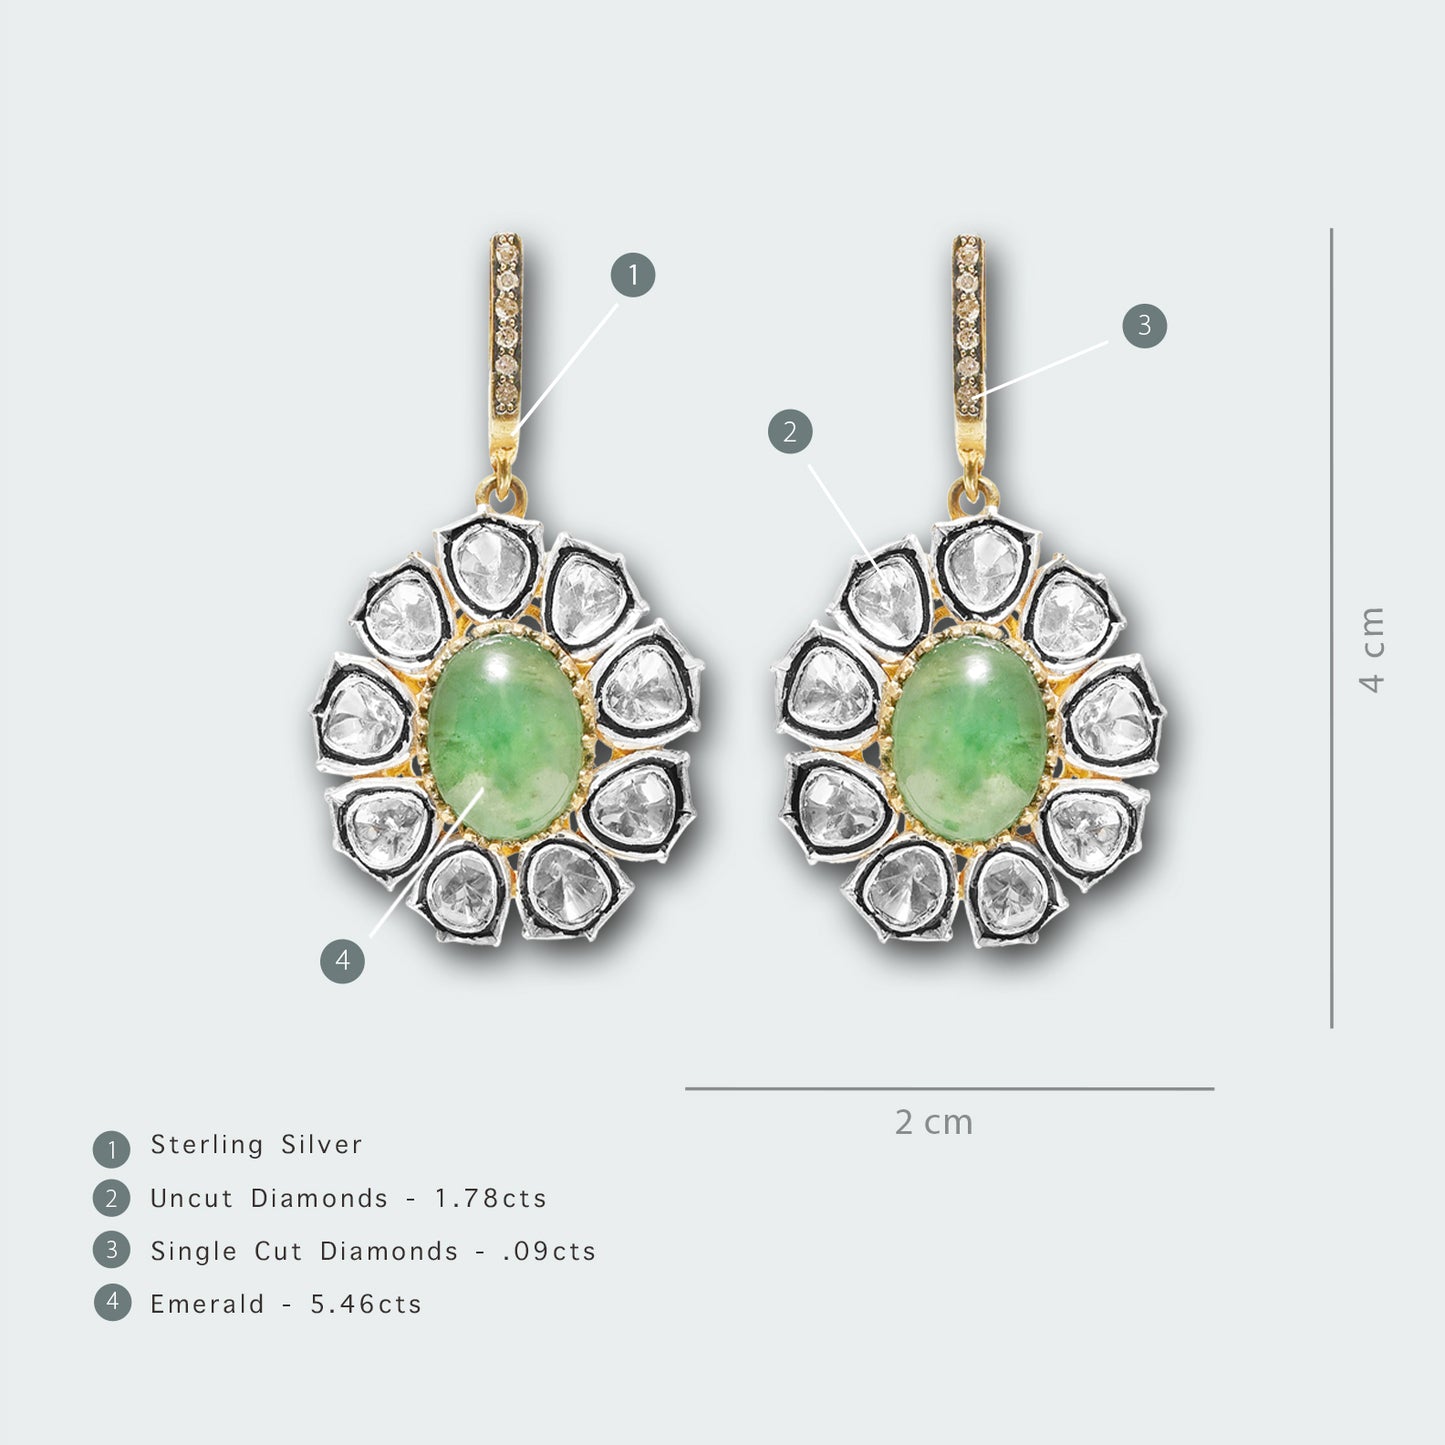 Arya Emerald and Uncut Diamond Earrings